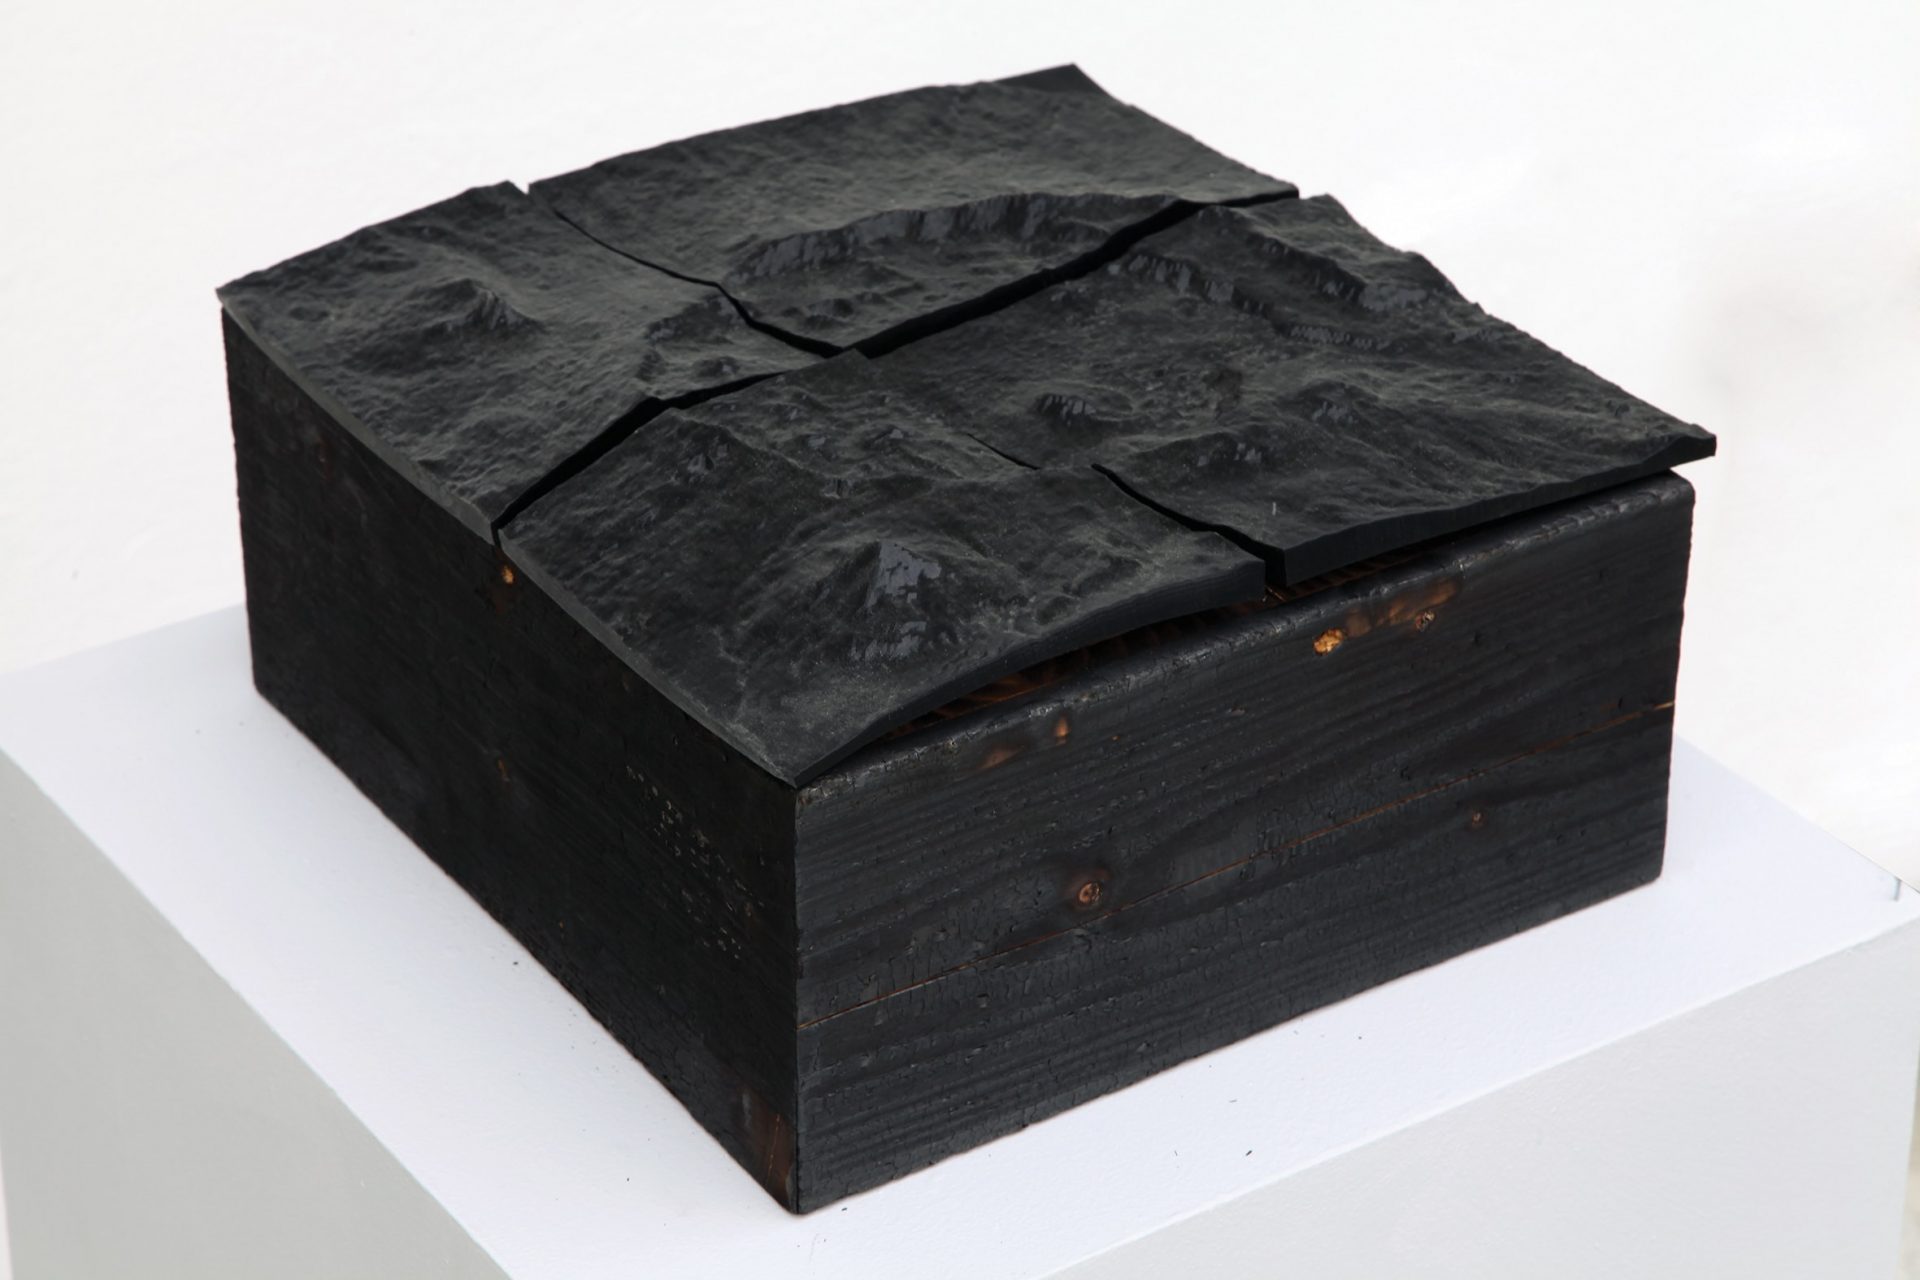 Thorsten Goldberg, „53°20’N” (Góra Okmok), 1:20, druk 3D na bazie spalonego drewna, fot. Jan Gaworski